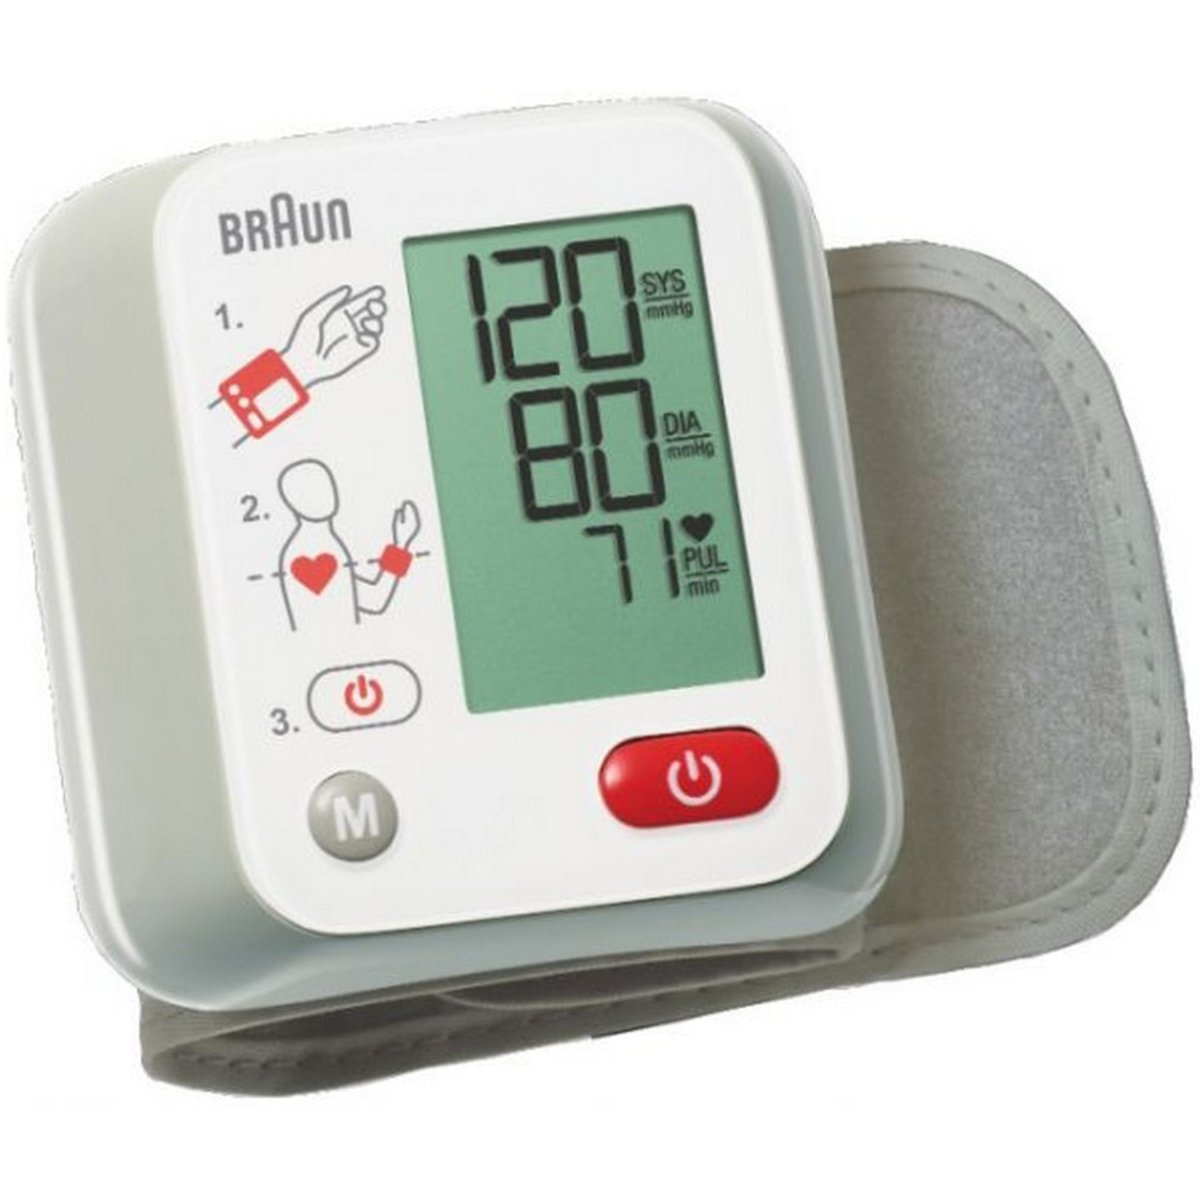 Braun Wrist BP Monitor BBP2000